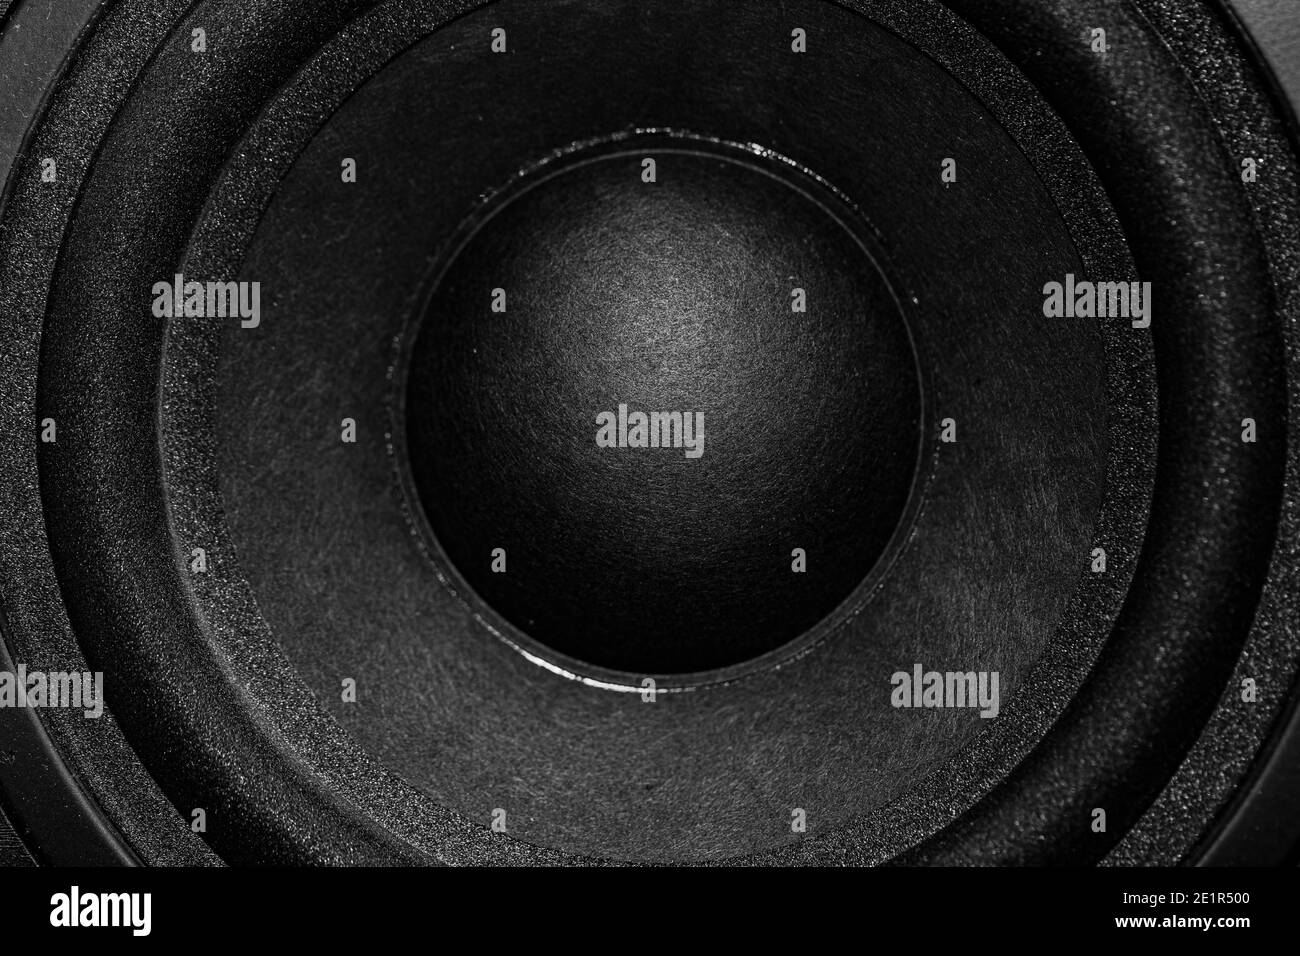 Closeup of black Subwoofer speaker Stock Photo